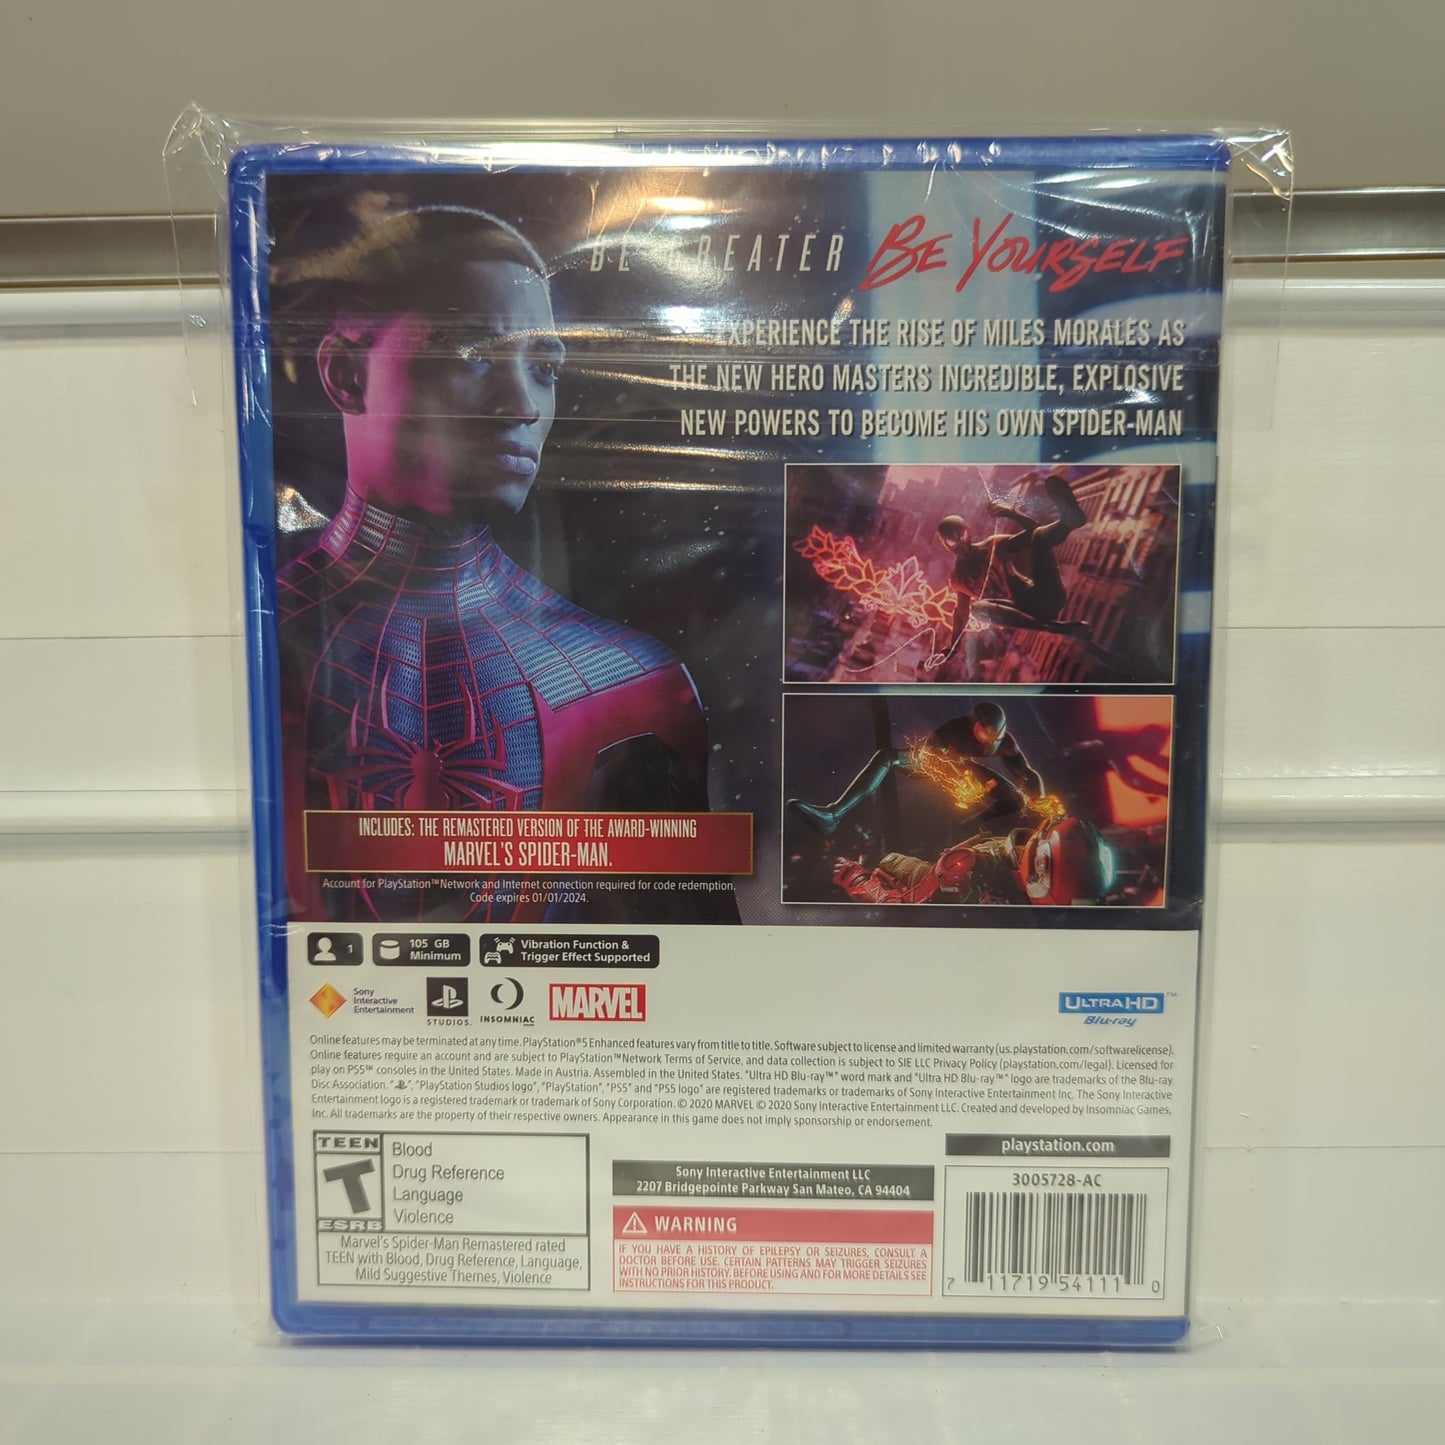 Marvel Spiderman: Miles Morales [Ultimate Edition] - Playstation 5